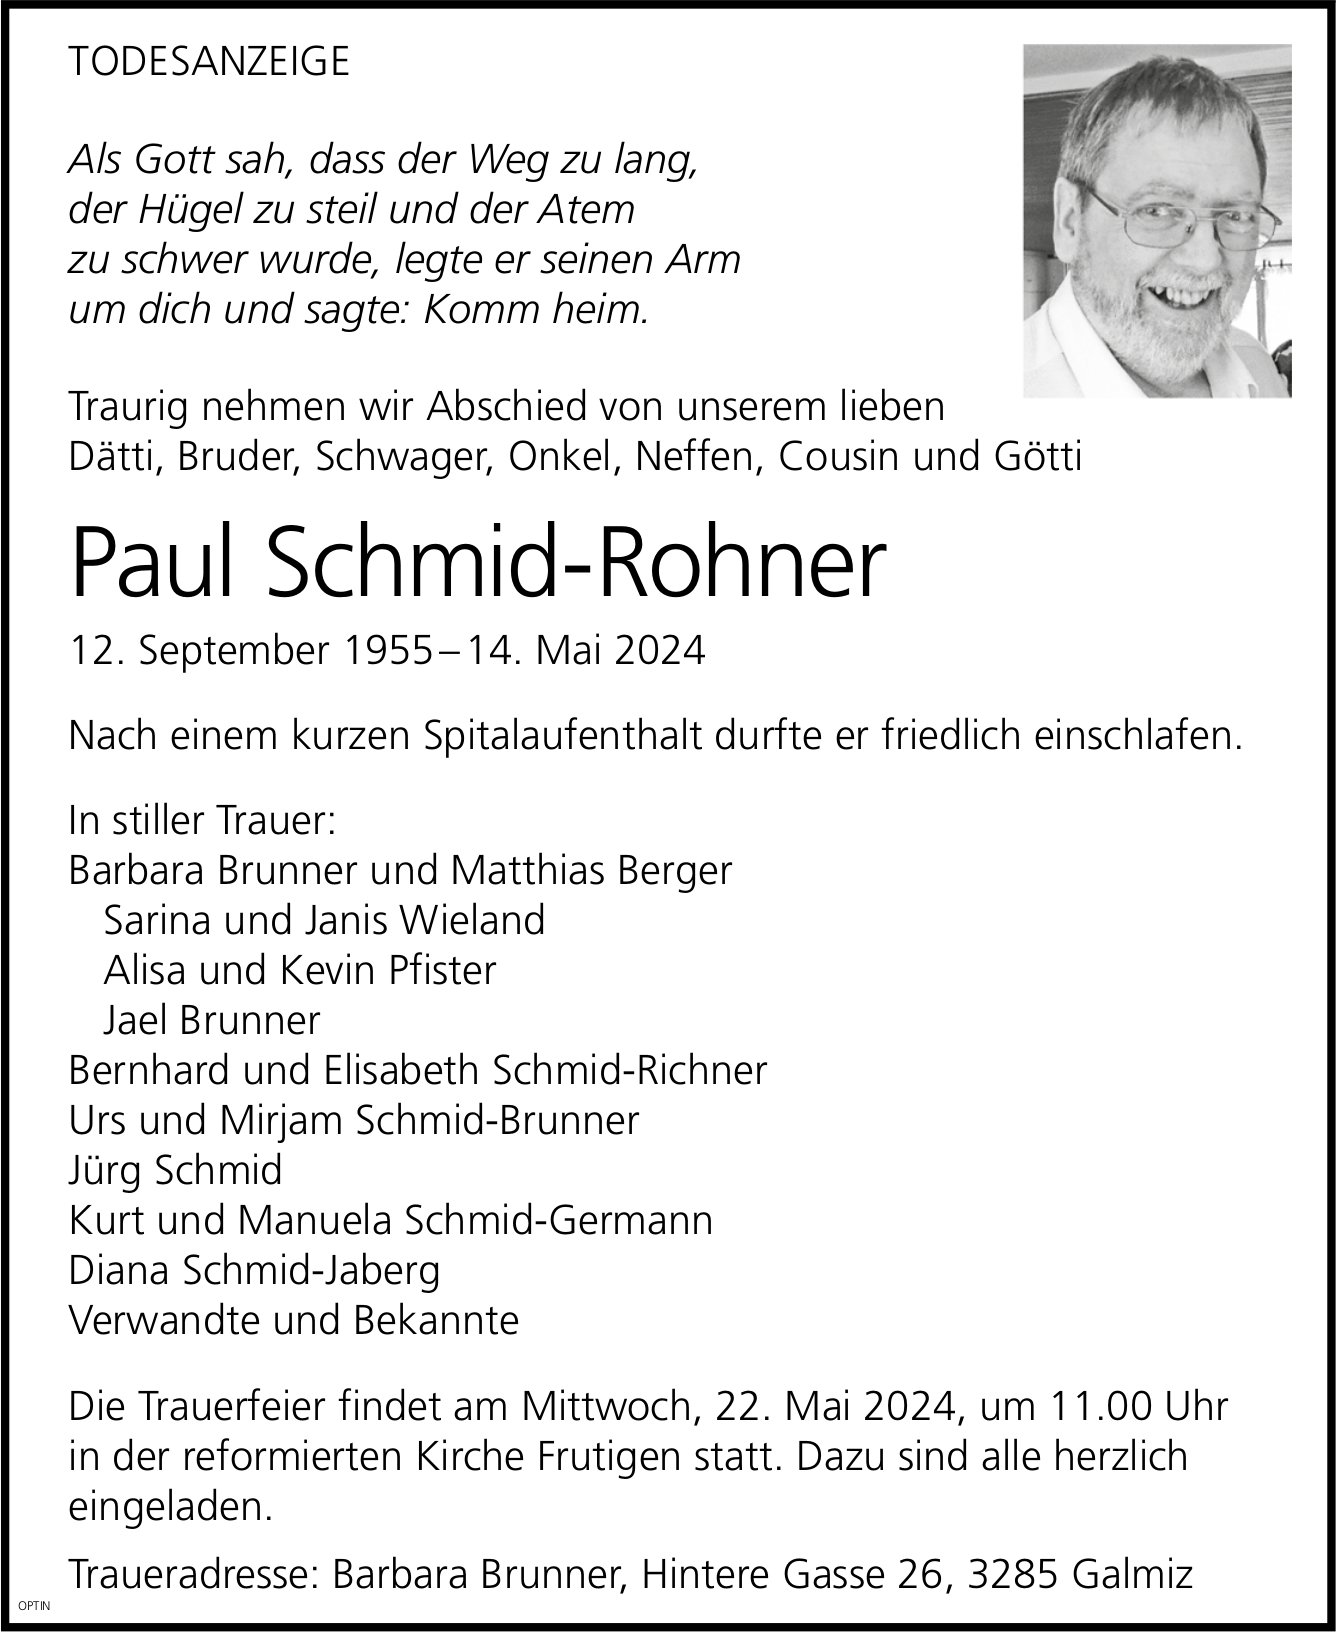 Paul Schmid-Rohner, Mai 2024 / TA